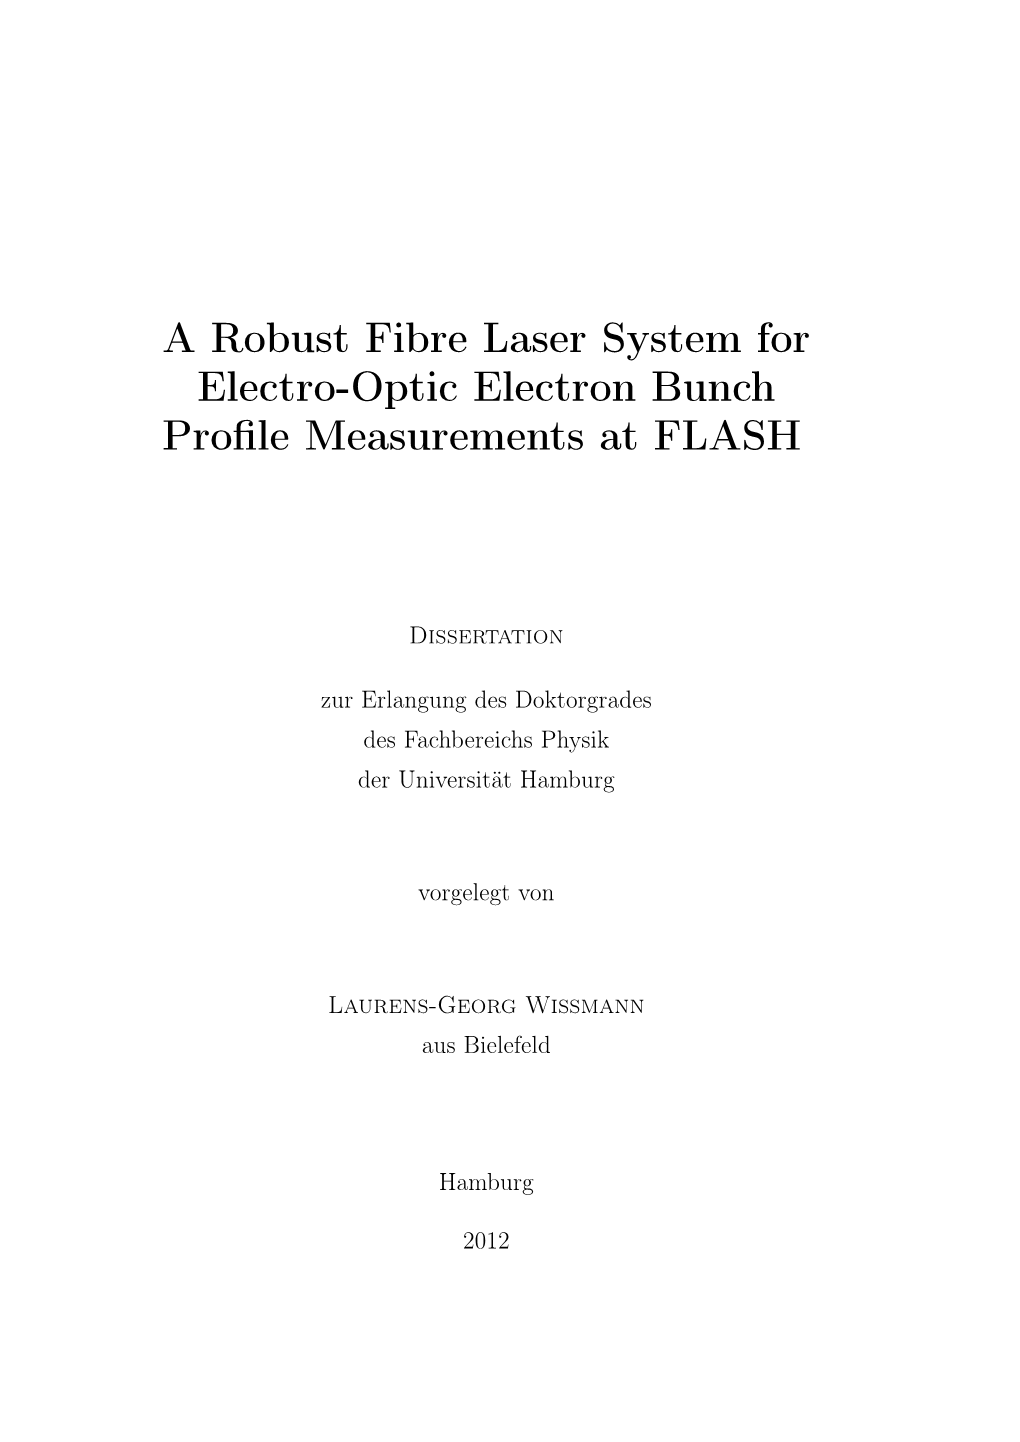 Fiber Laser Based Electro Optic Bunch Profile Measurements At